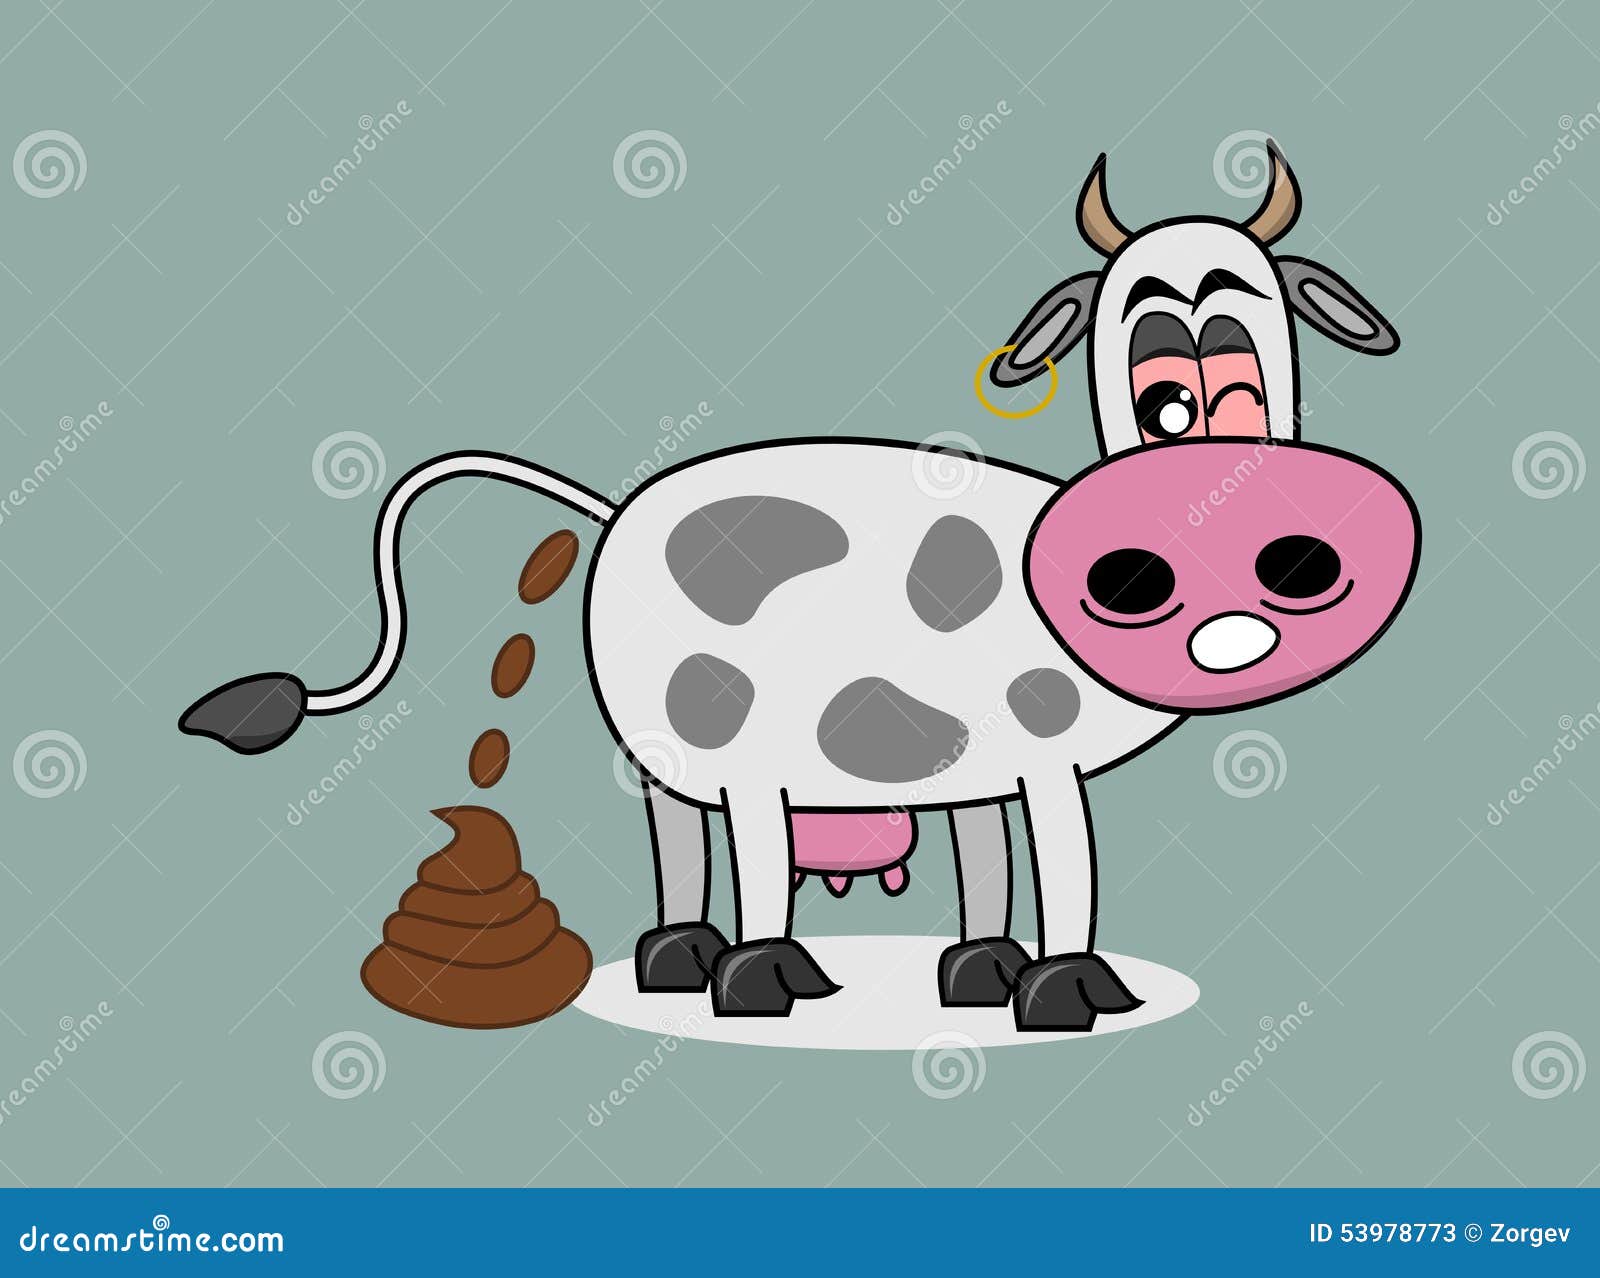 cow poop clipart - photo #13